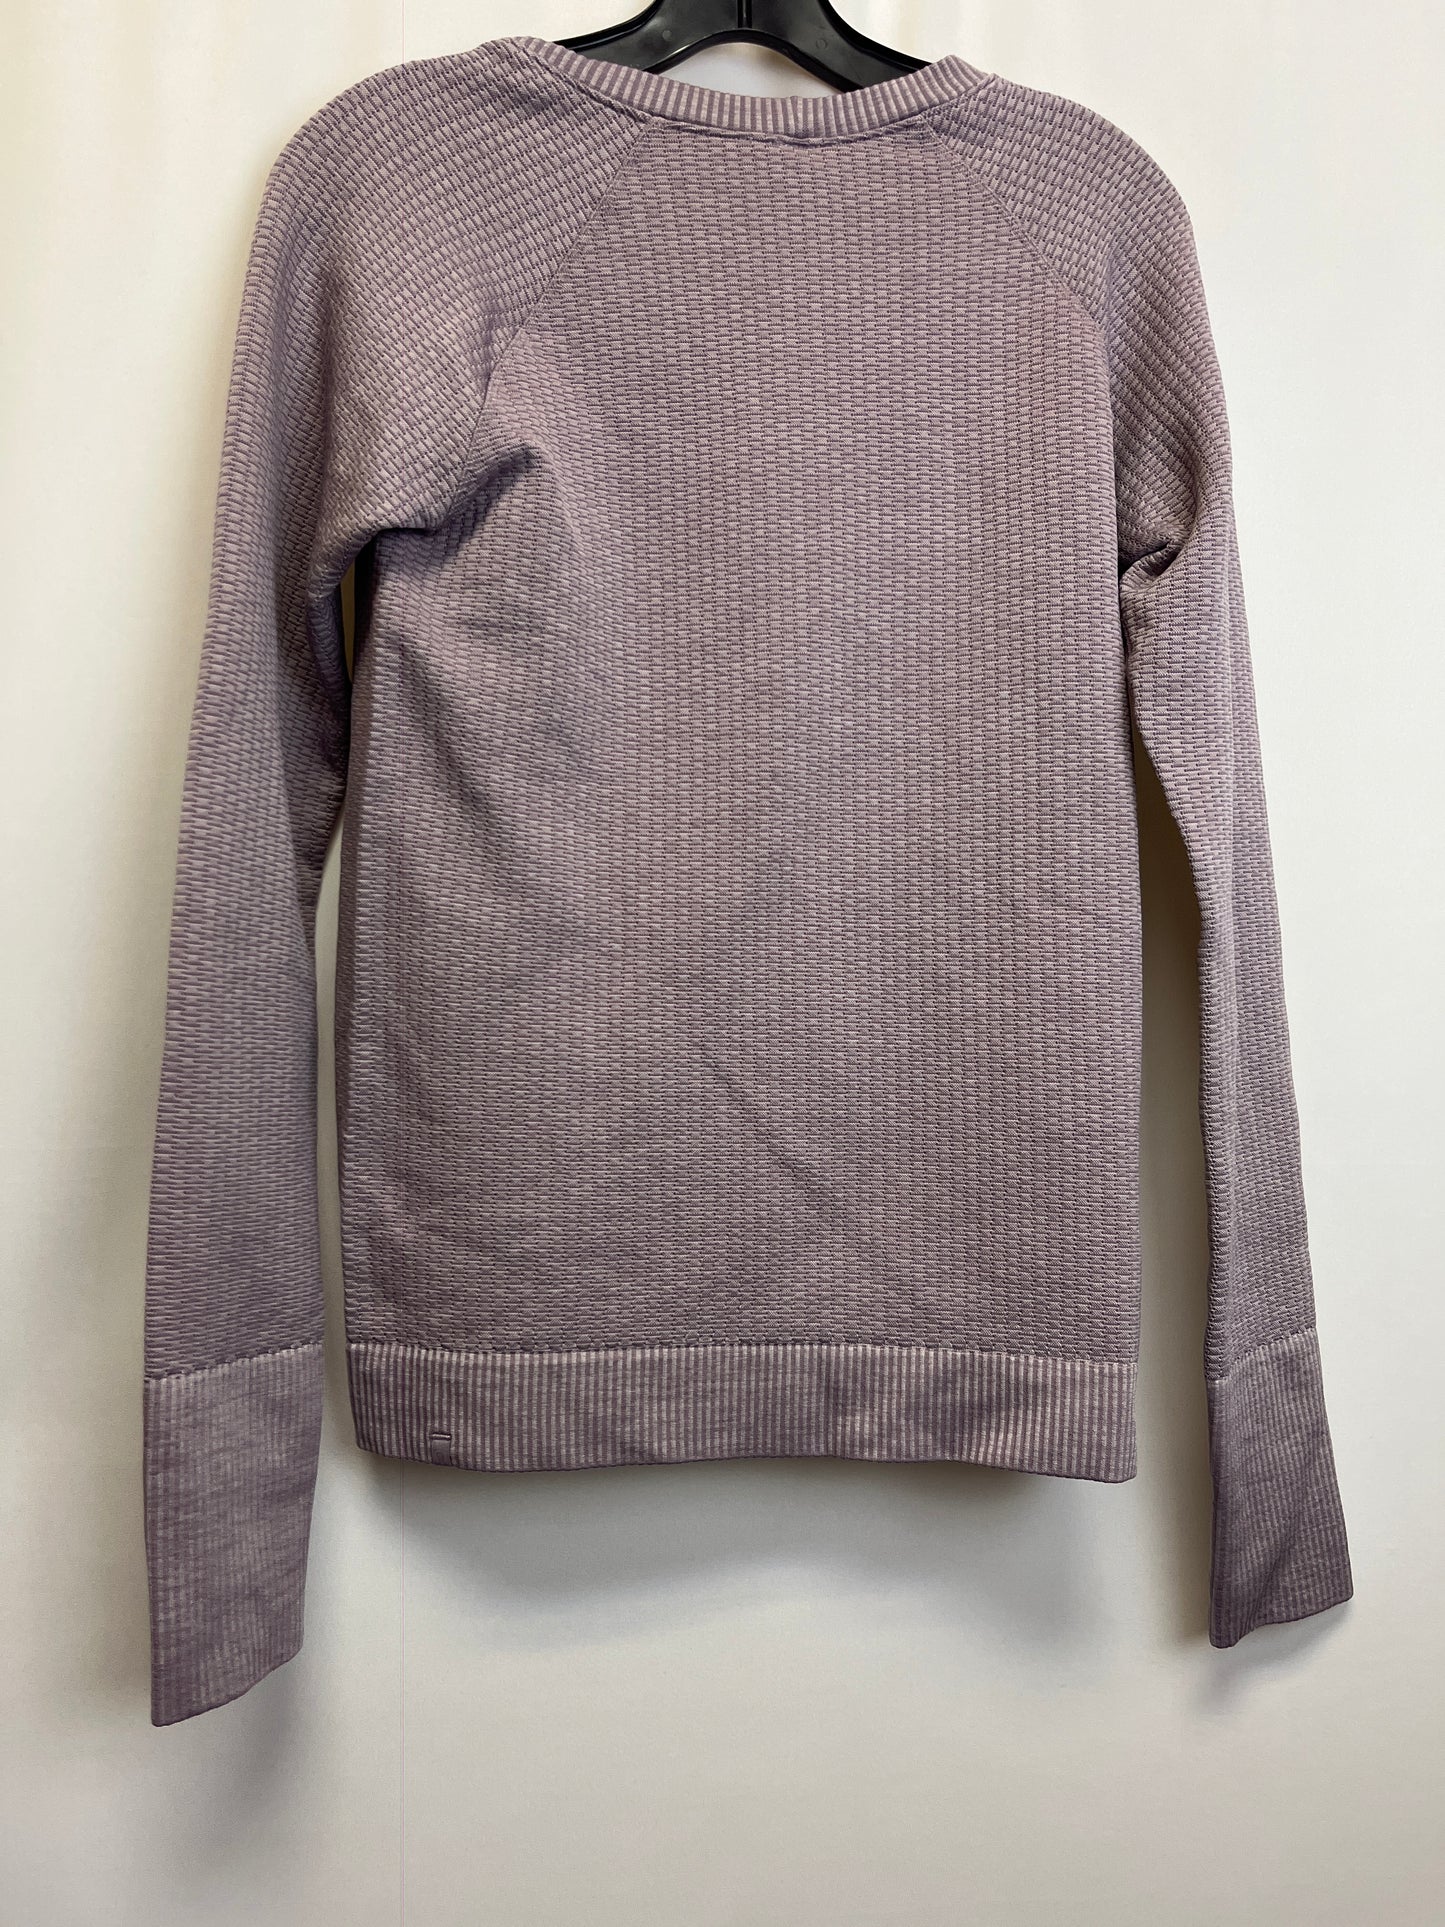 Athletic Sweatshirt Crewneck By Lululemon  Size: L